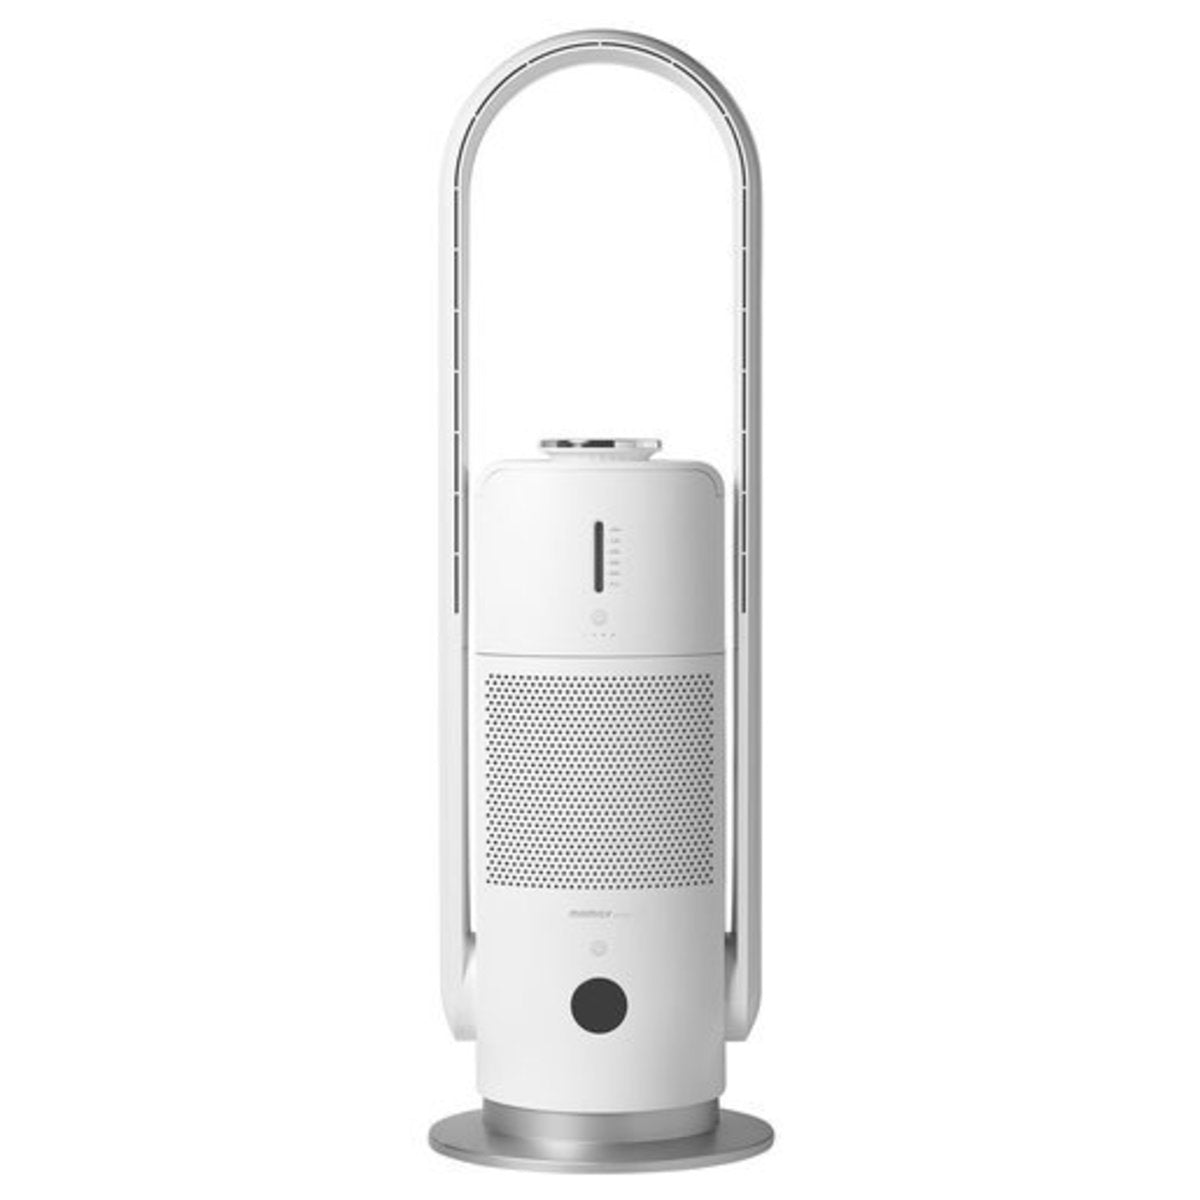 MOMAX - AP9S Ultra-Air Mist IoT Smart UV Air Purification and Humidification Fan